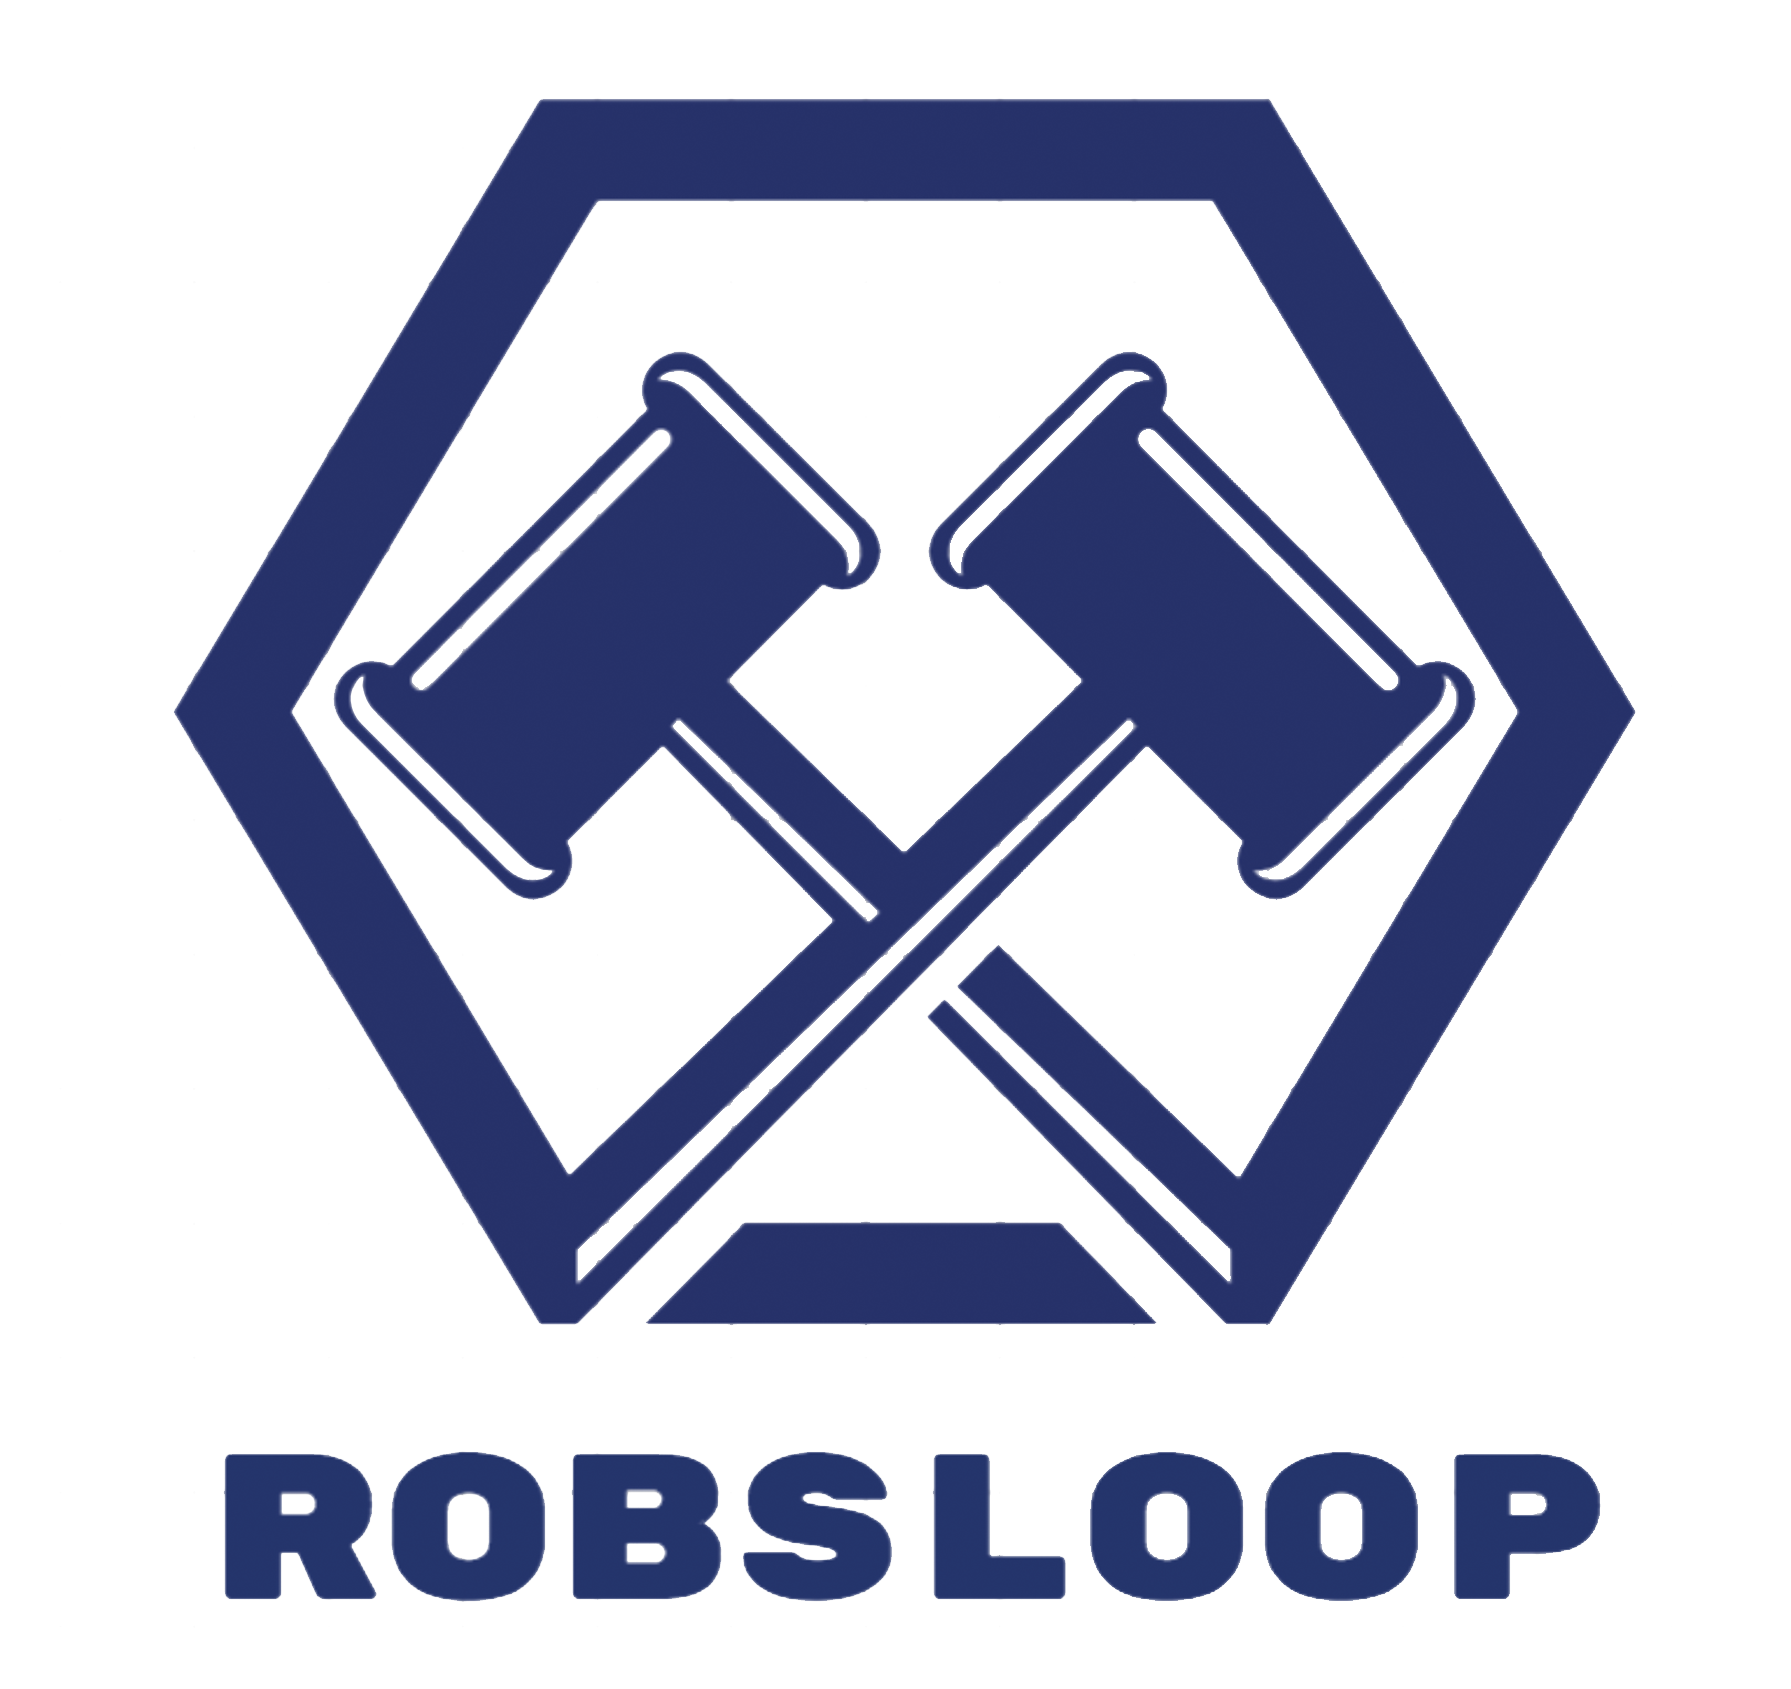 Rob Sloop